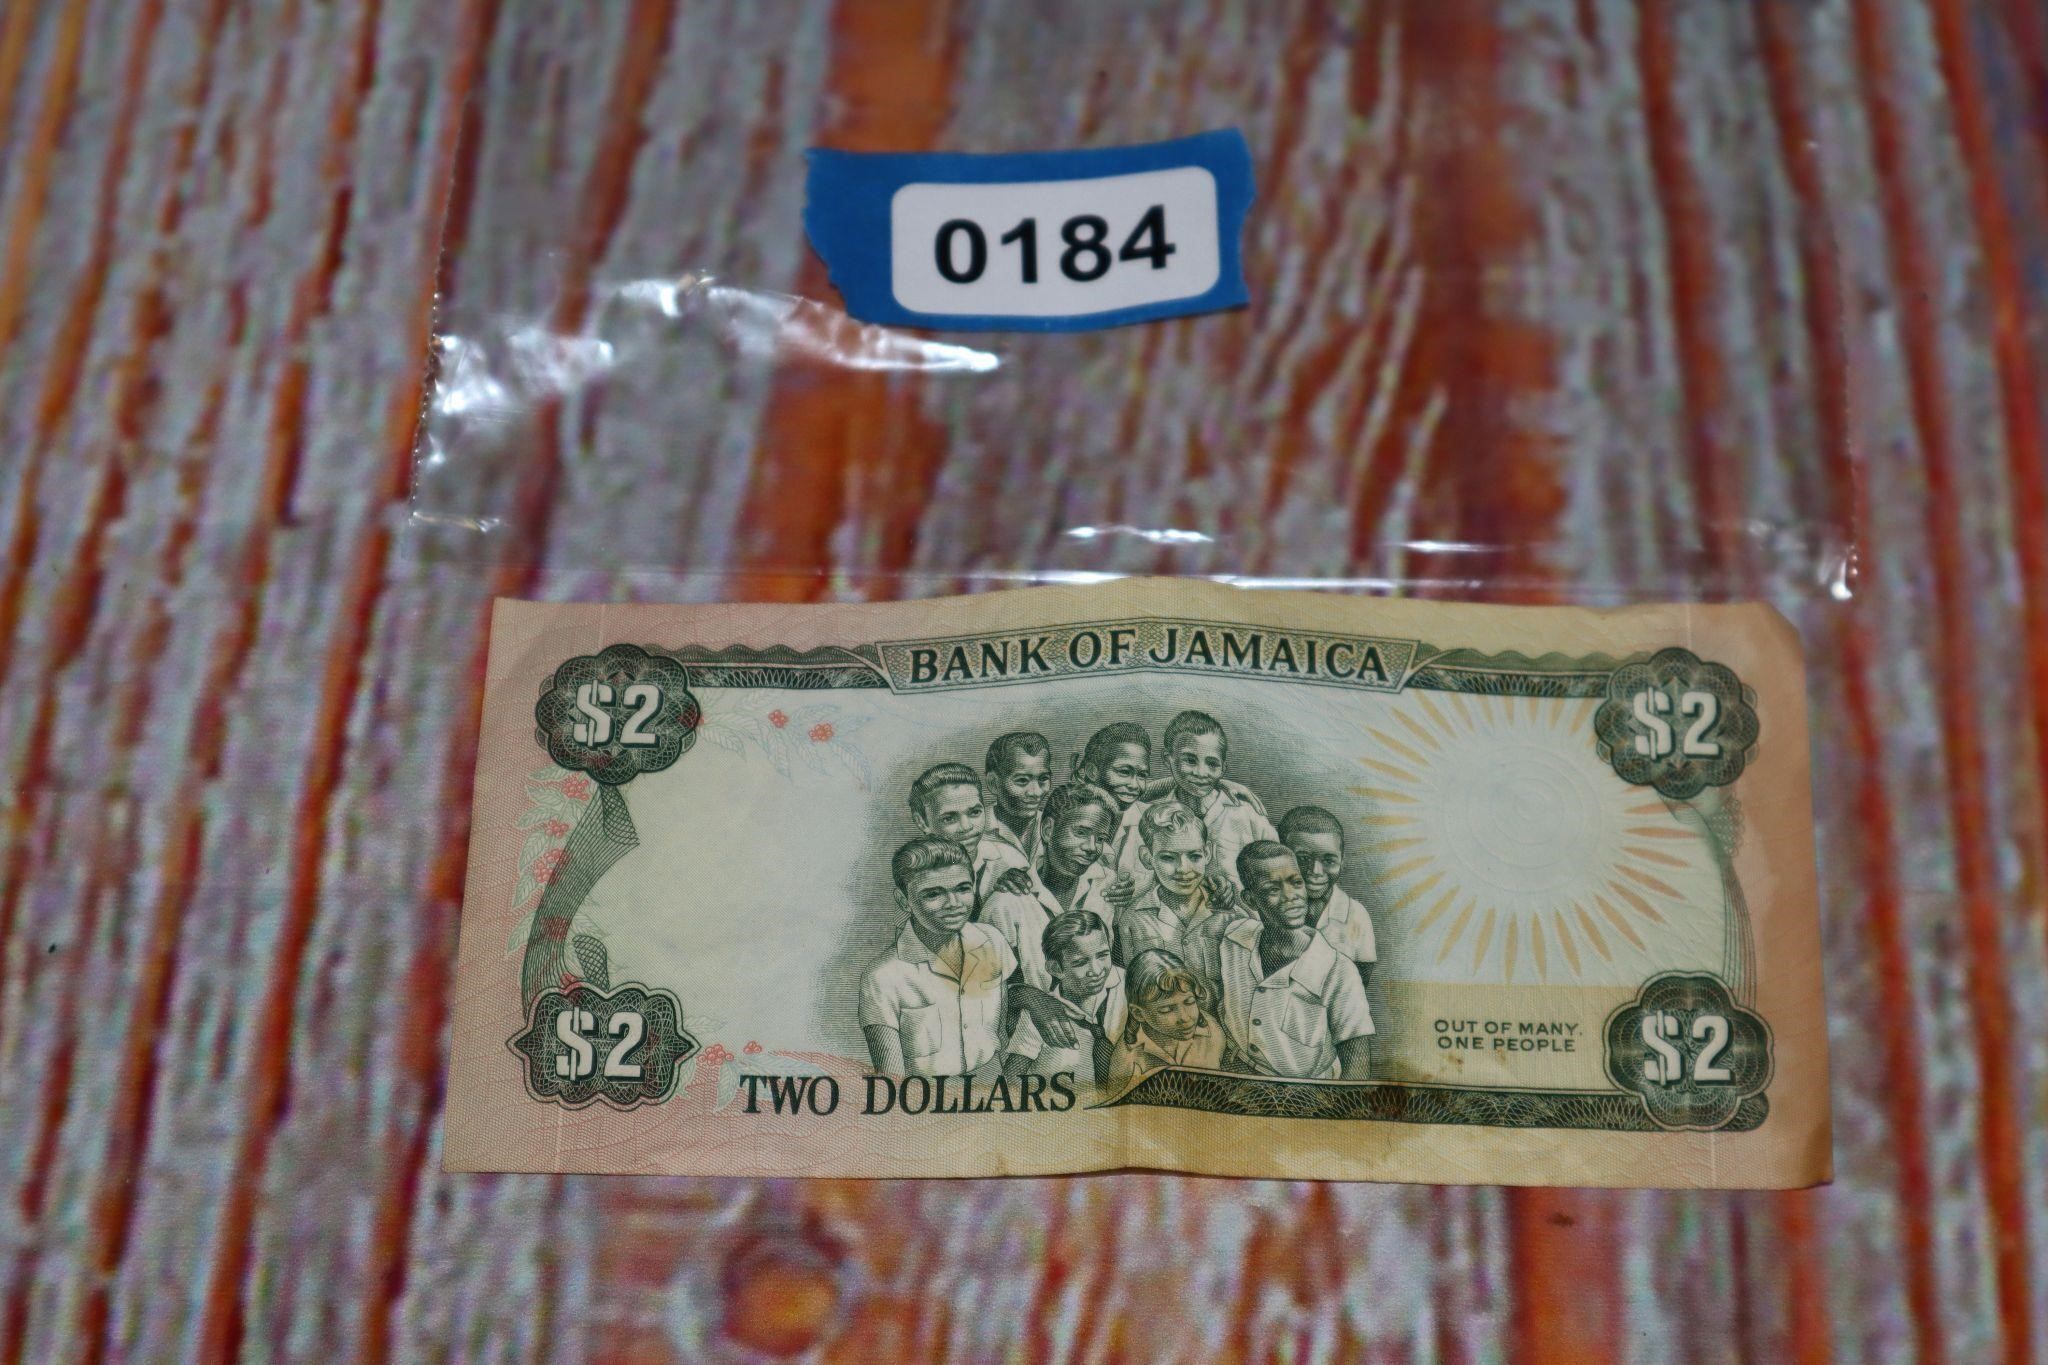 Bank Of Jamaica $2 bill